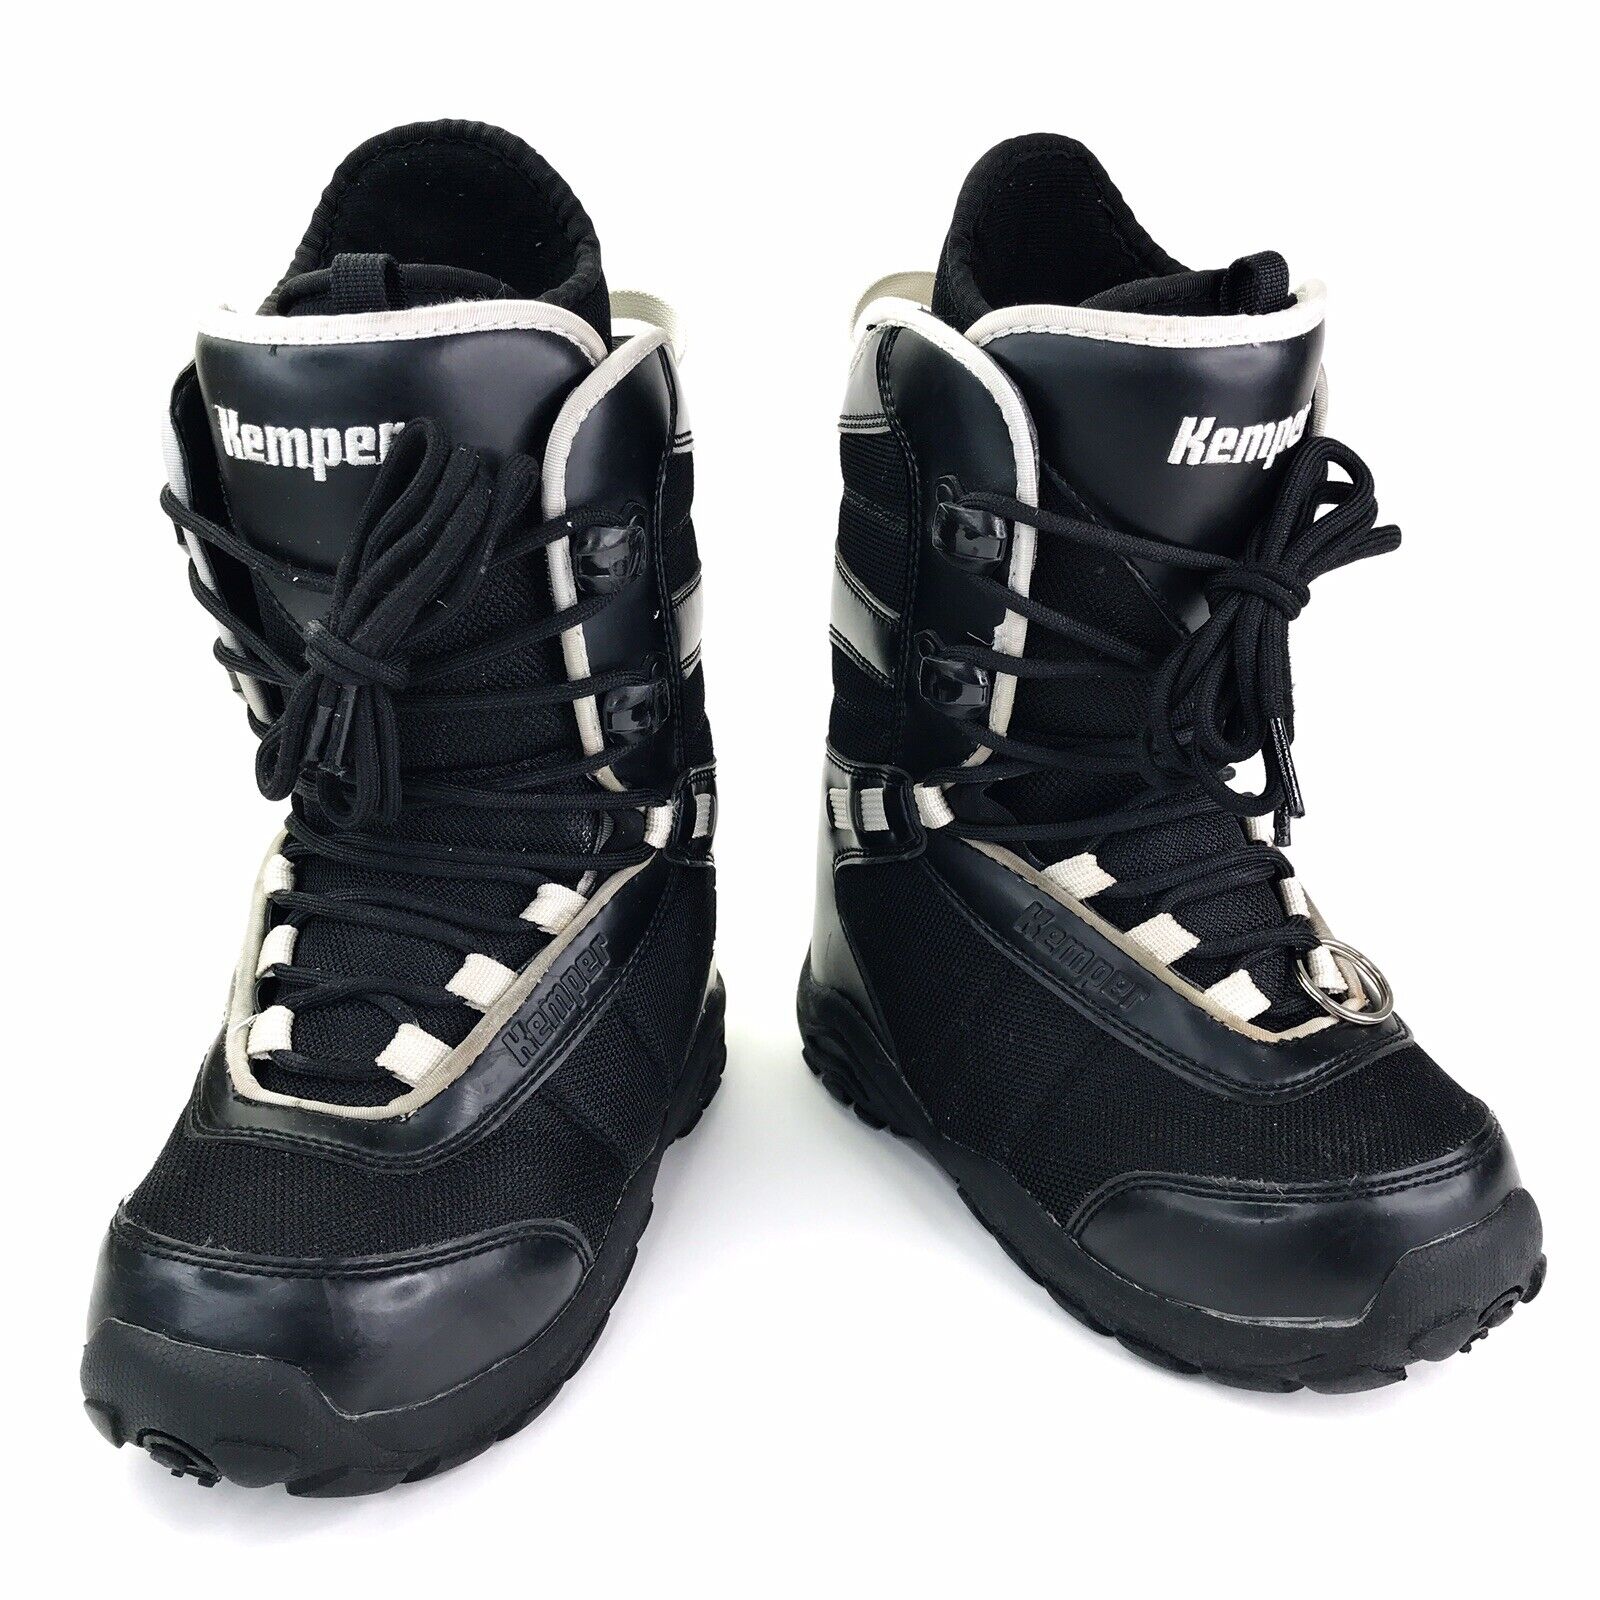 Kemper Women's Black Snowboard Winter Boots Lace Up Midcalf Us5 Eu35 24.0 Mondo